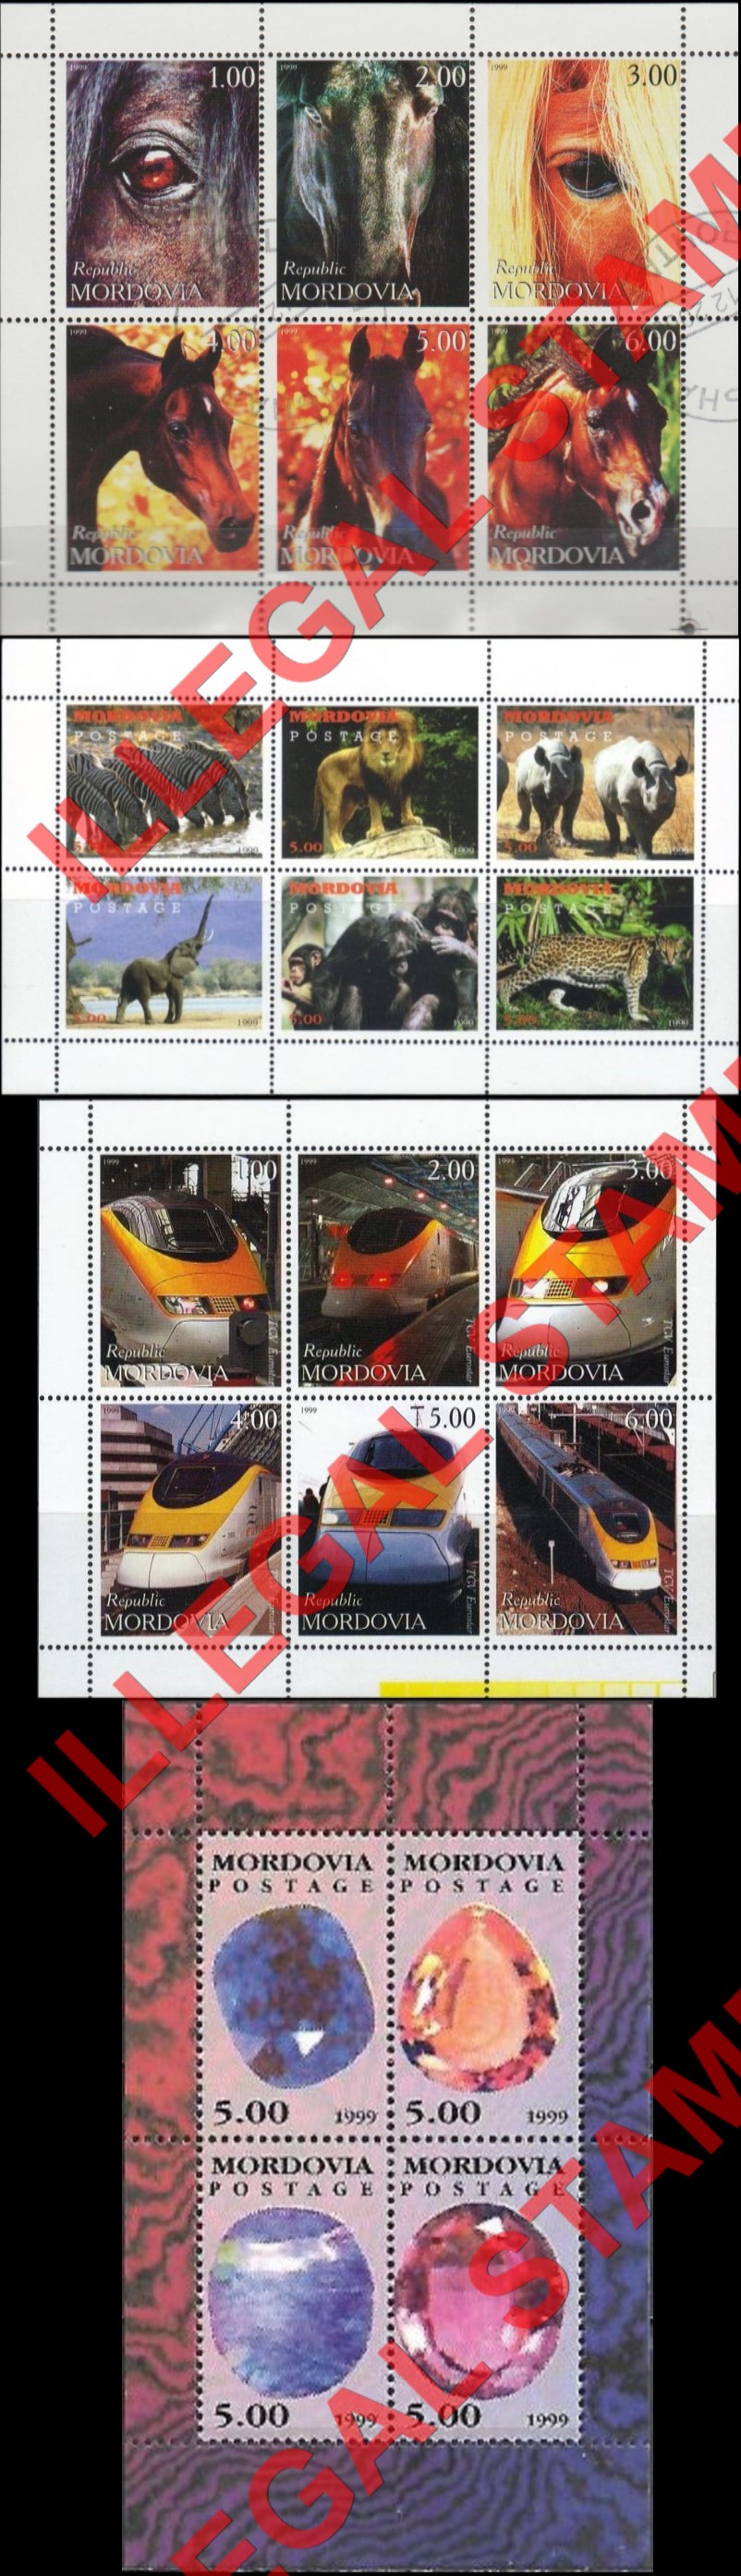 Republic of Mordovia 1999 Counterfeit Illegal Stamps (Part 2)